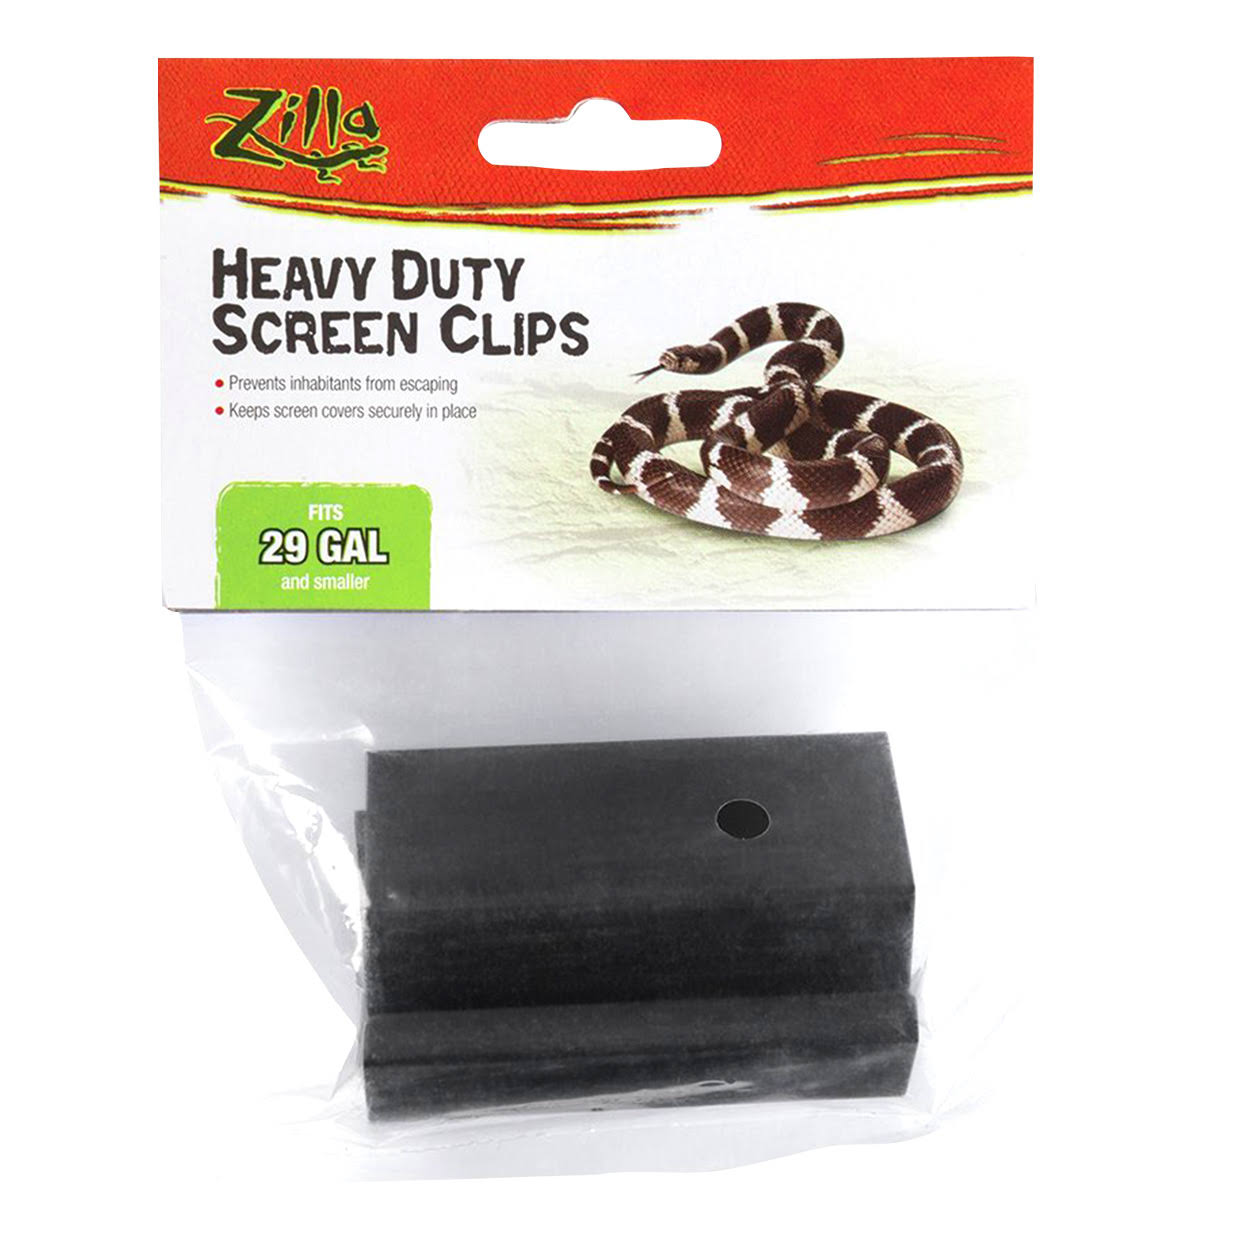 Zilla Heavy Duty Screen Clips Reptile Supply